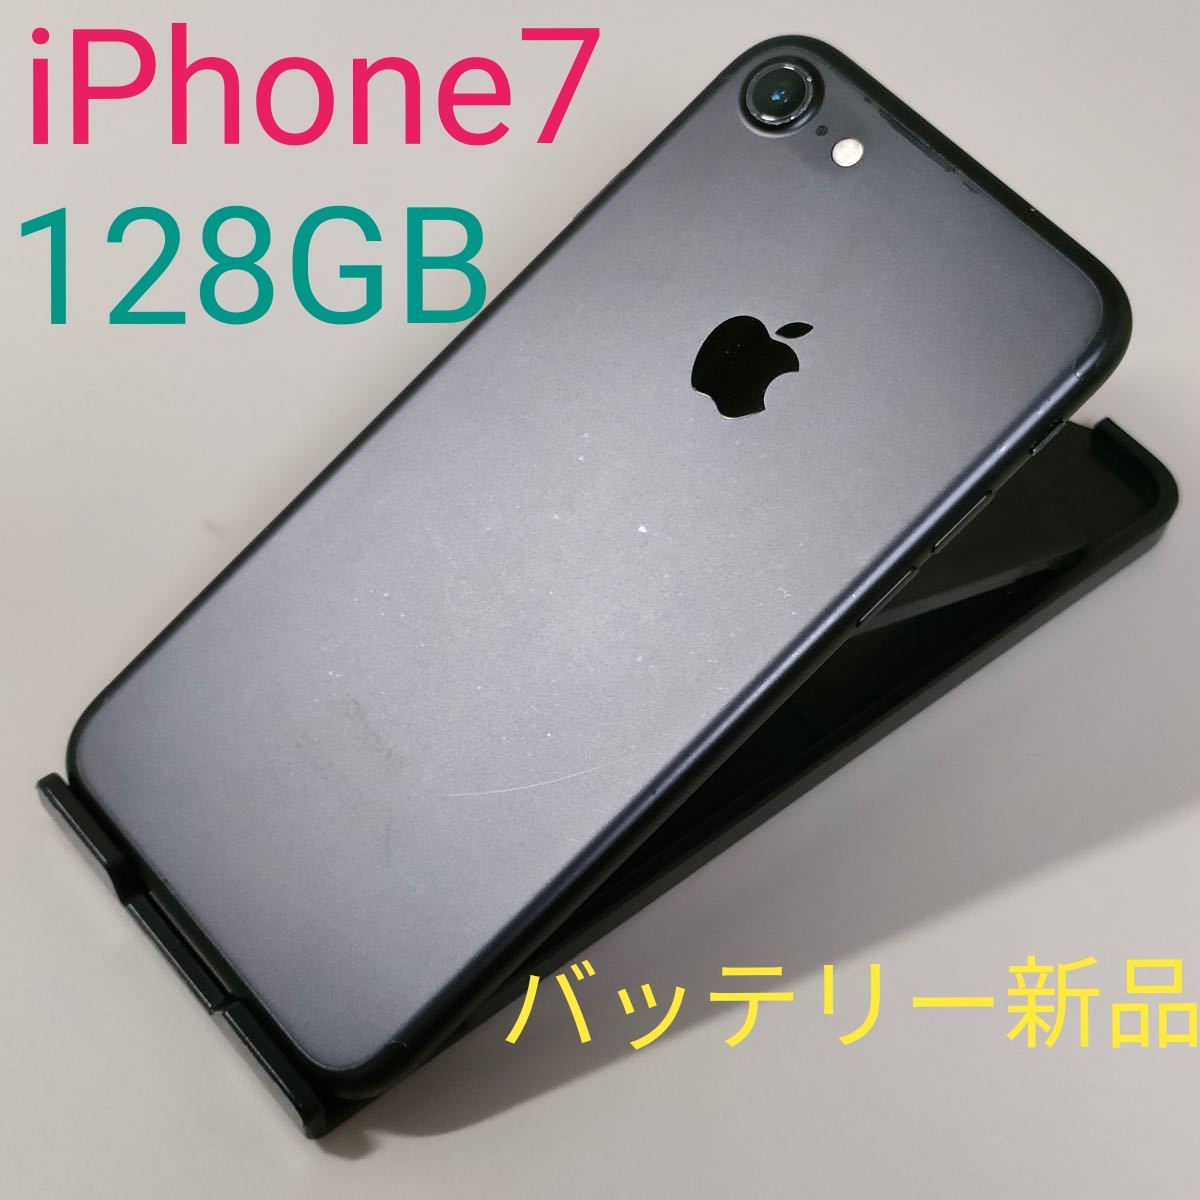 iPhone7 128GB SIMフリー - rehda.com